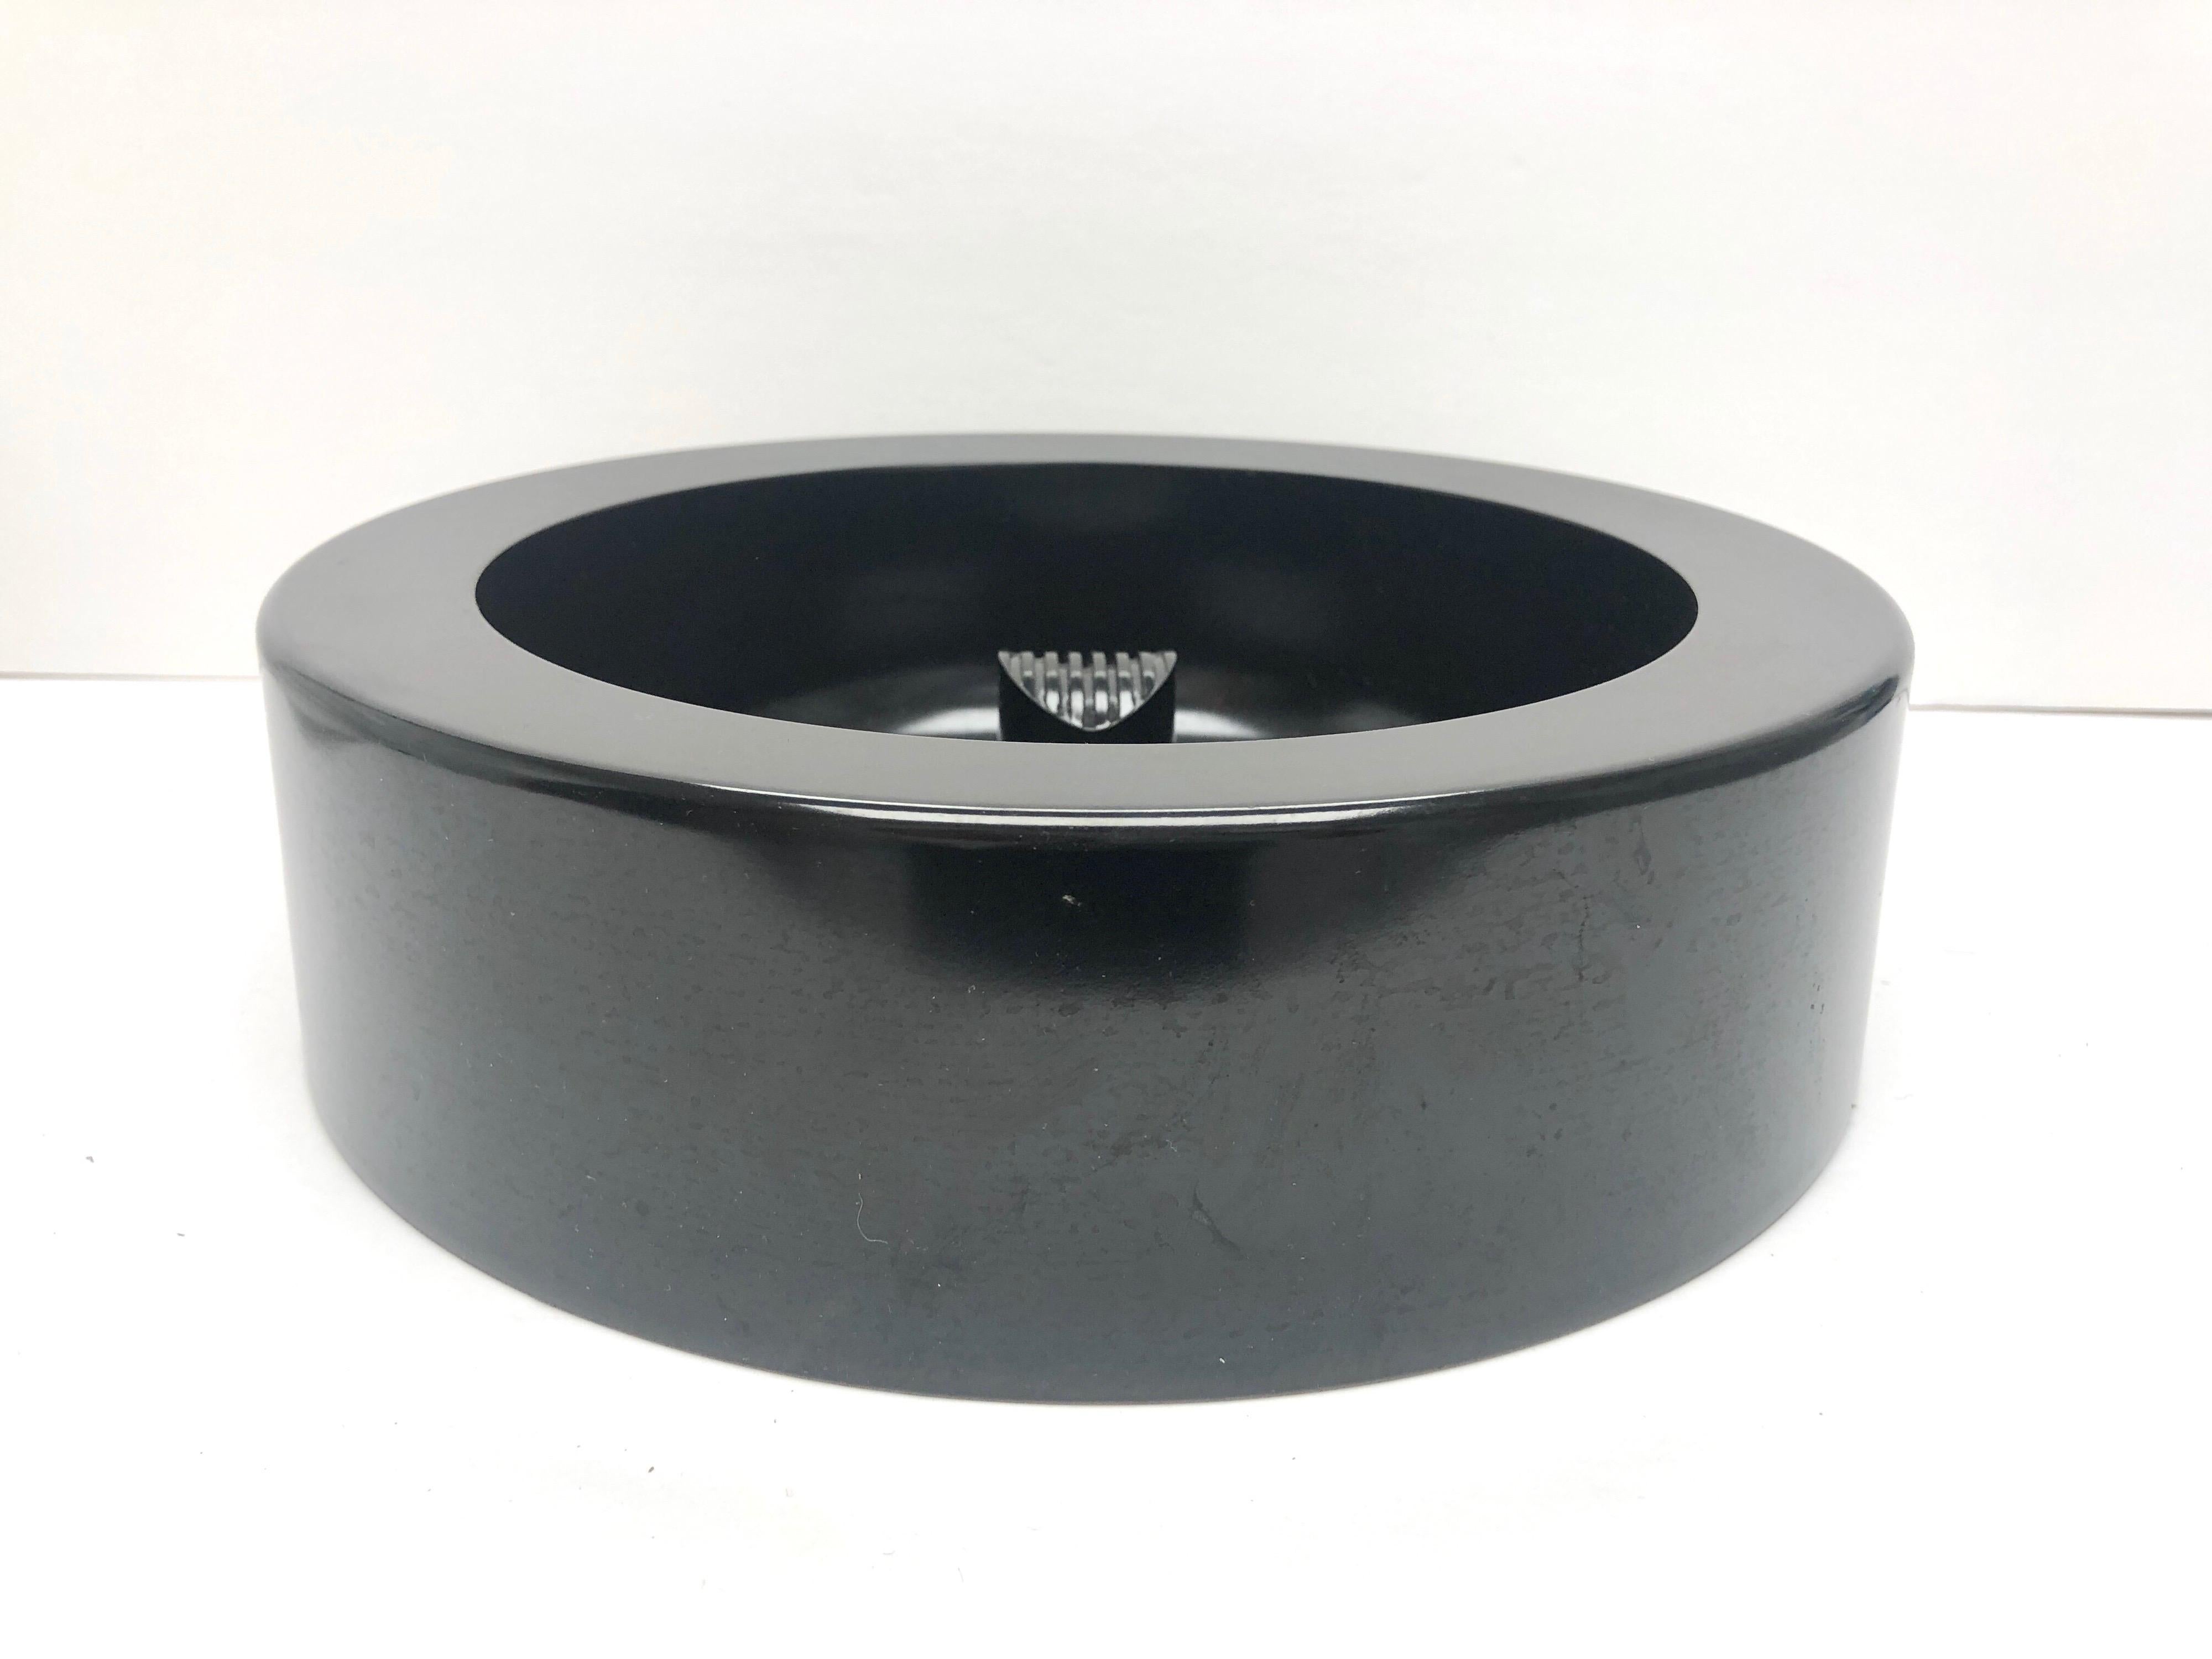 A large black melamine bowl designed by Enzo Mari, edited by Danese Milano.